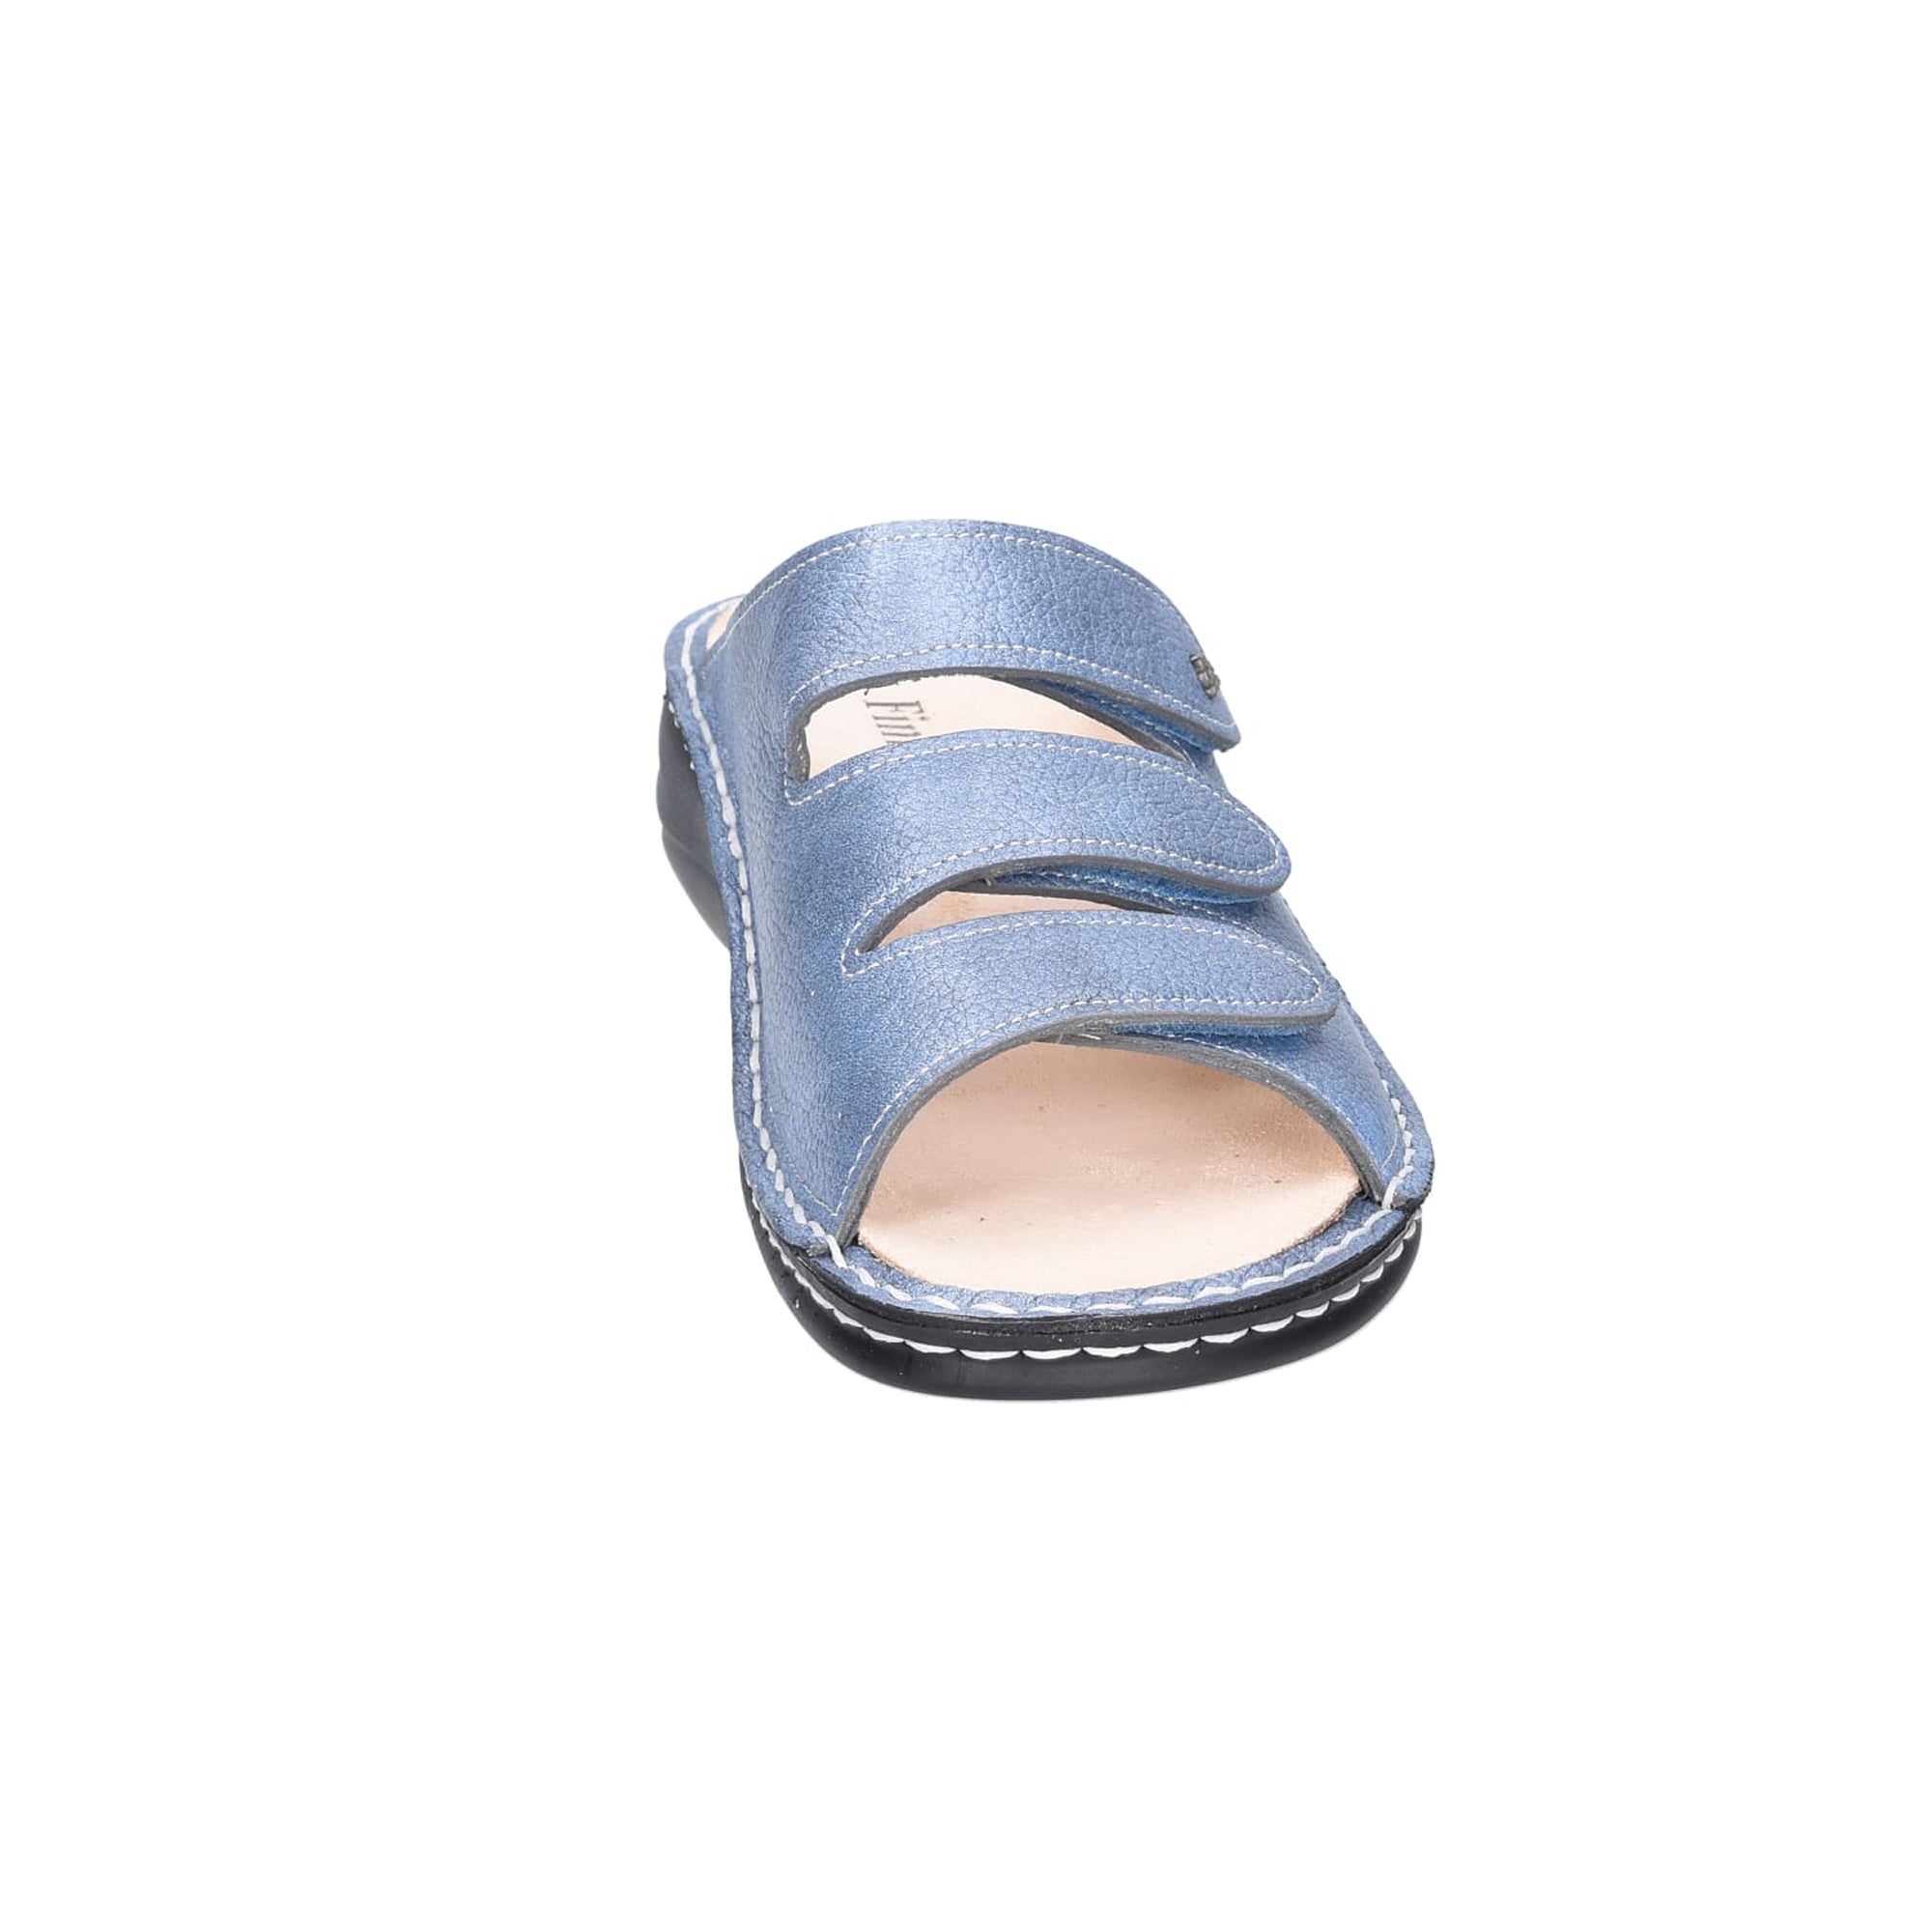 Finn Comfort Hellas Women's Comfortable Blue Shoes - Stylish & Durable